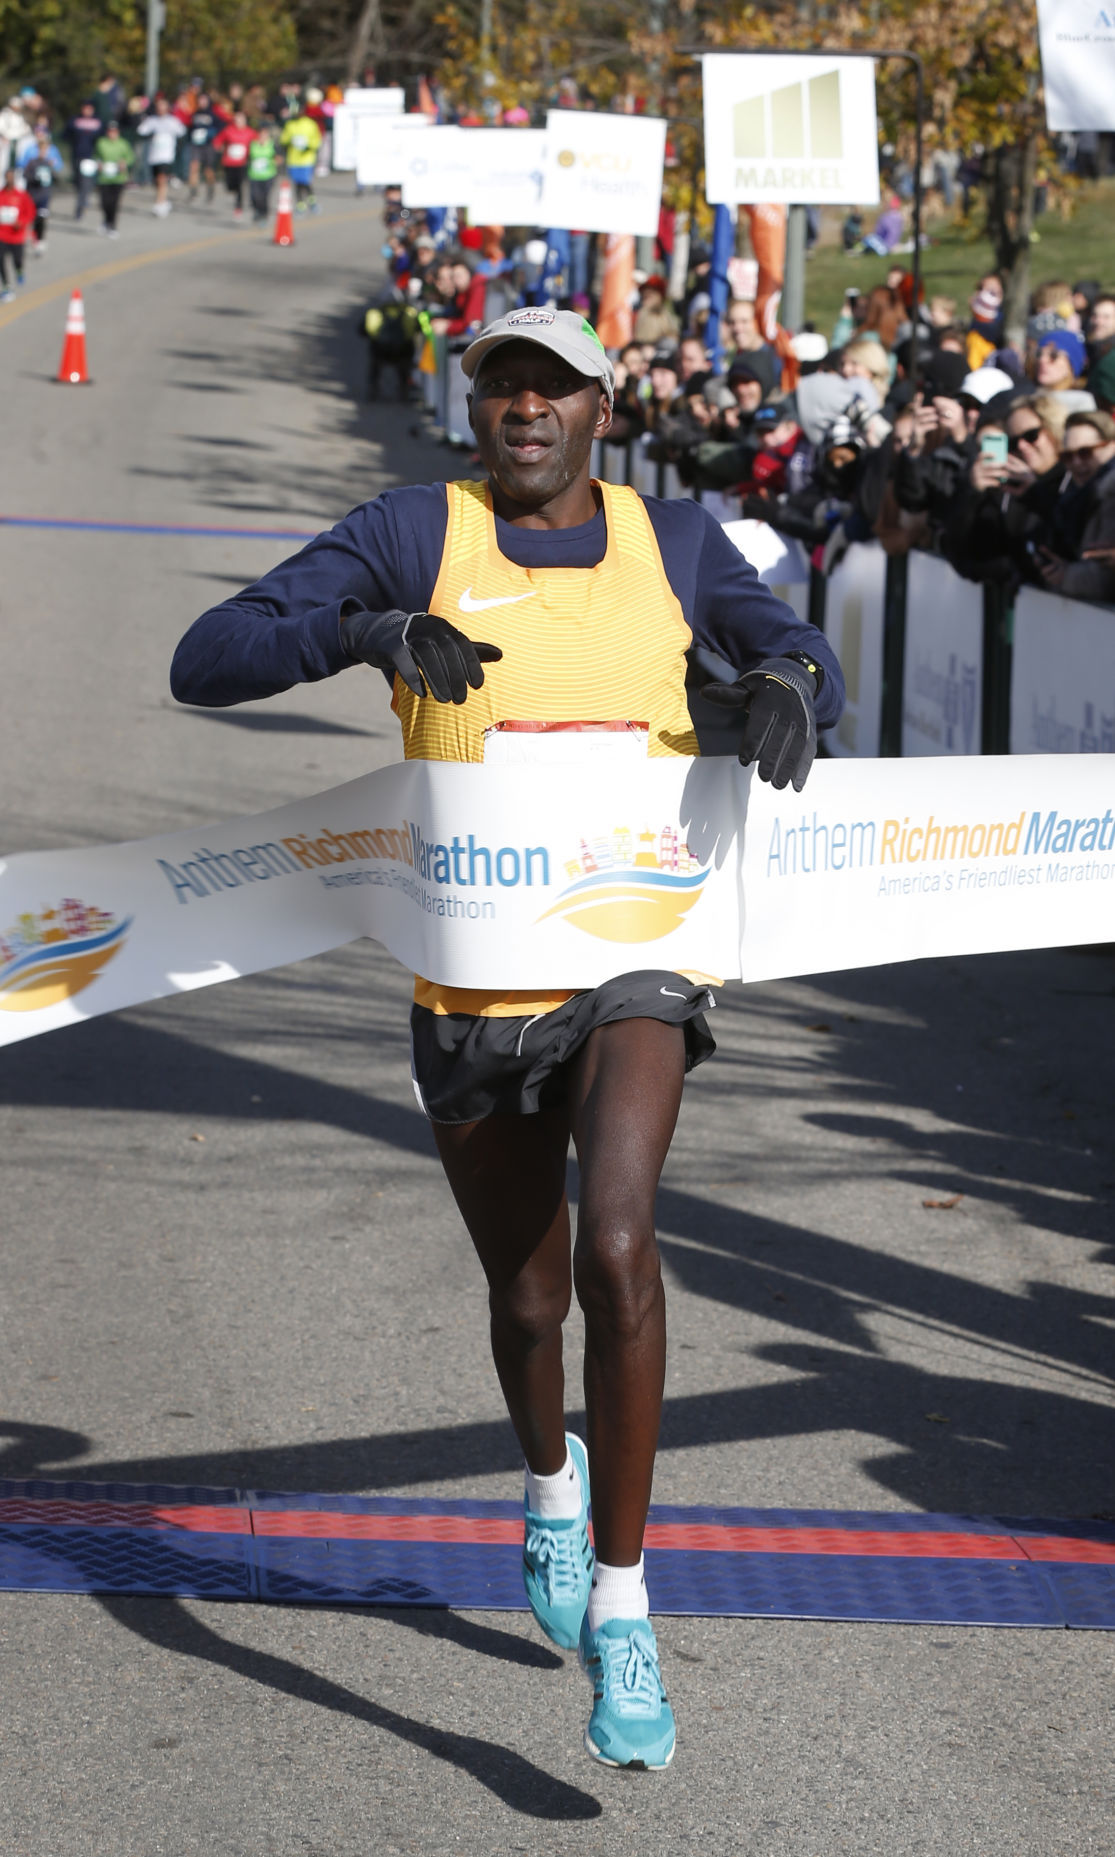 Richmond Marathon disqualifies three runners, including men's winner ...